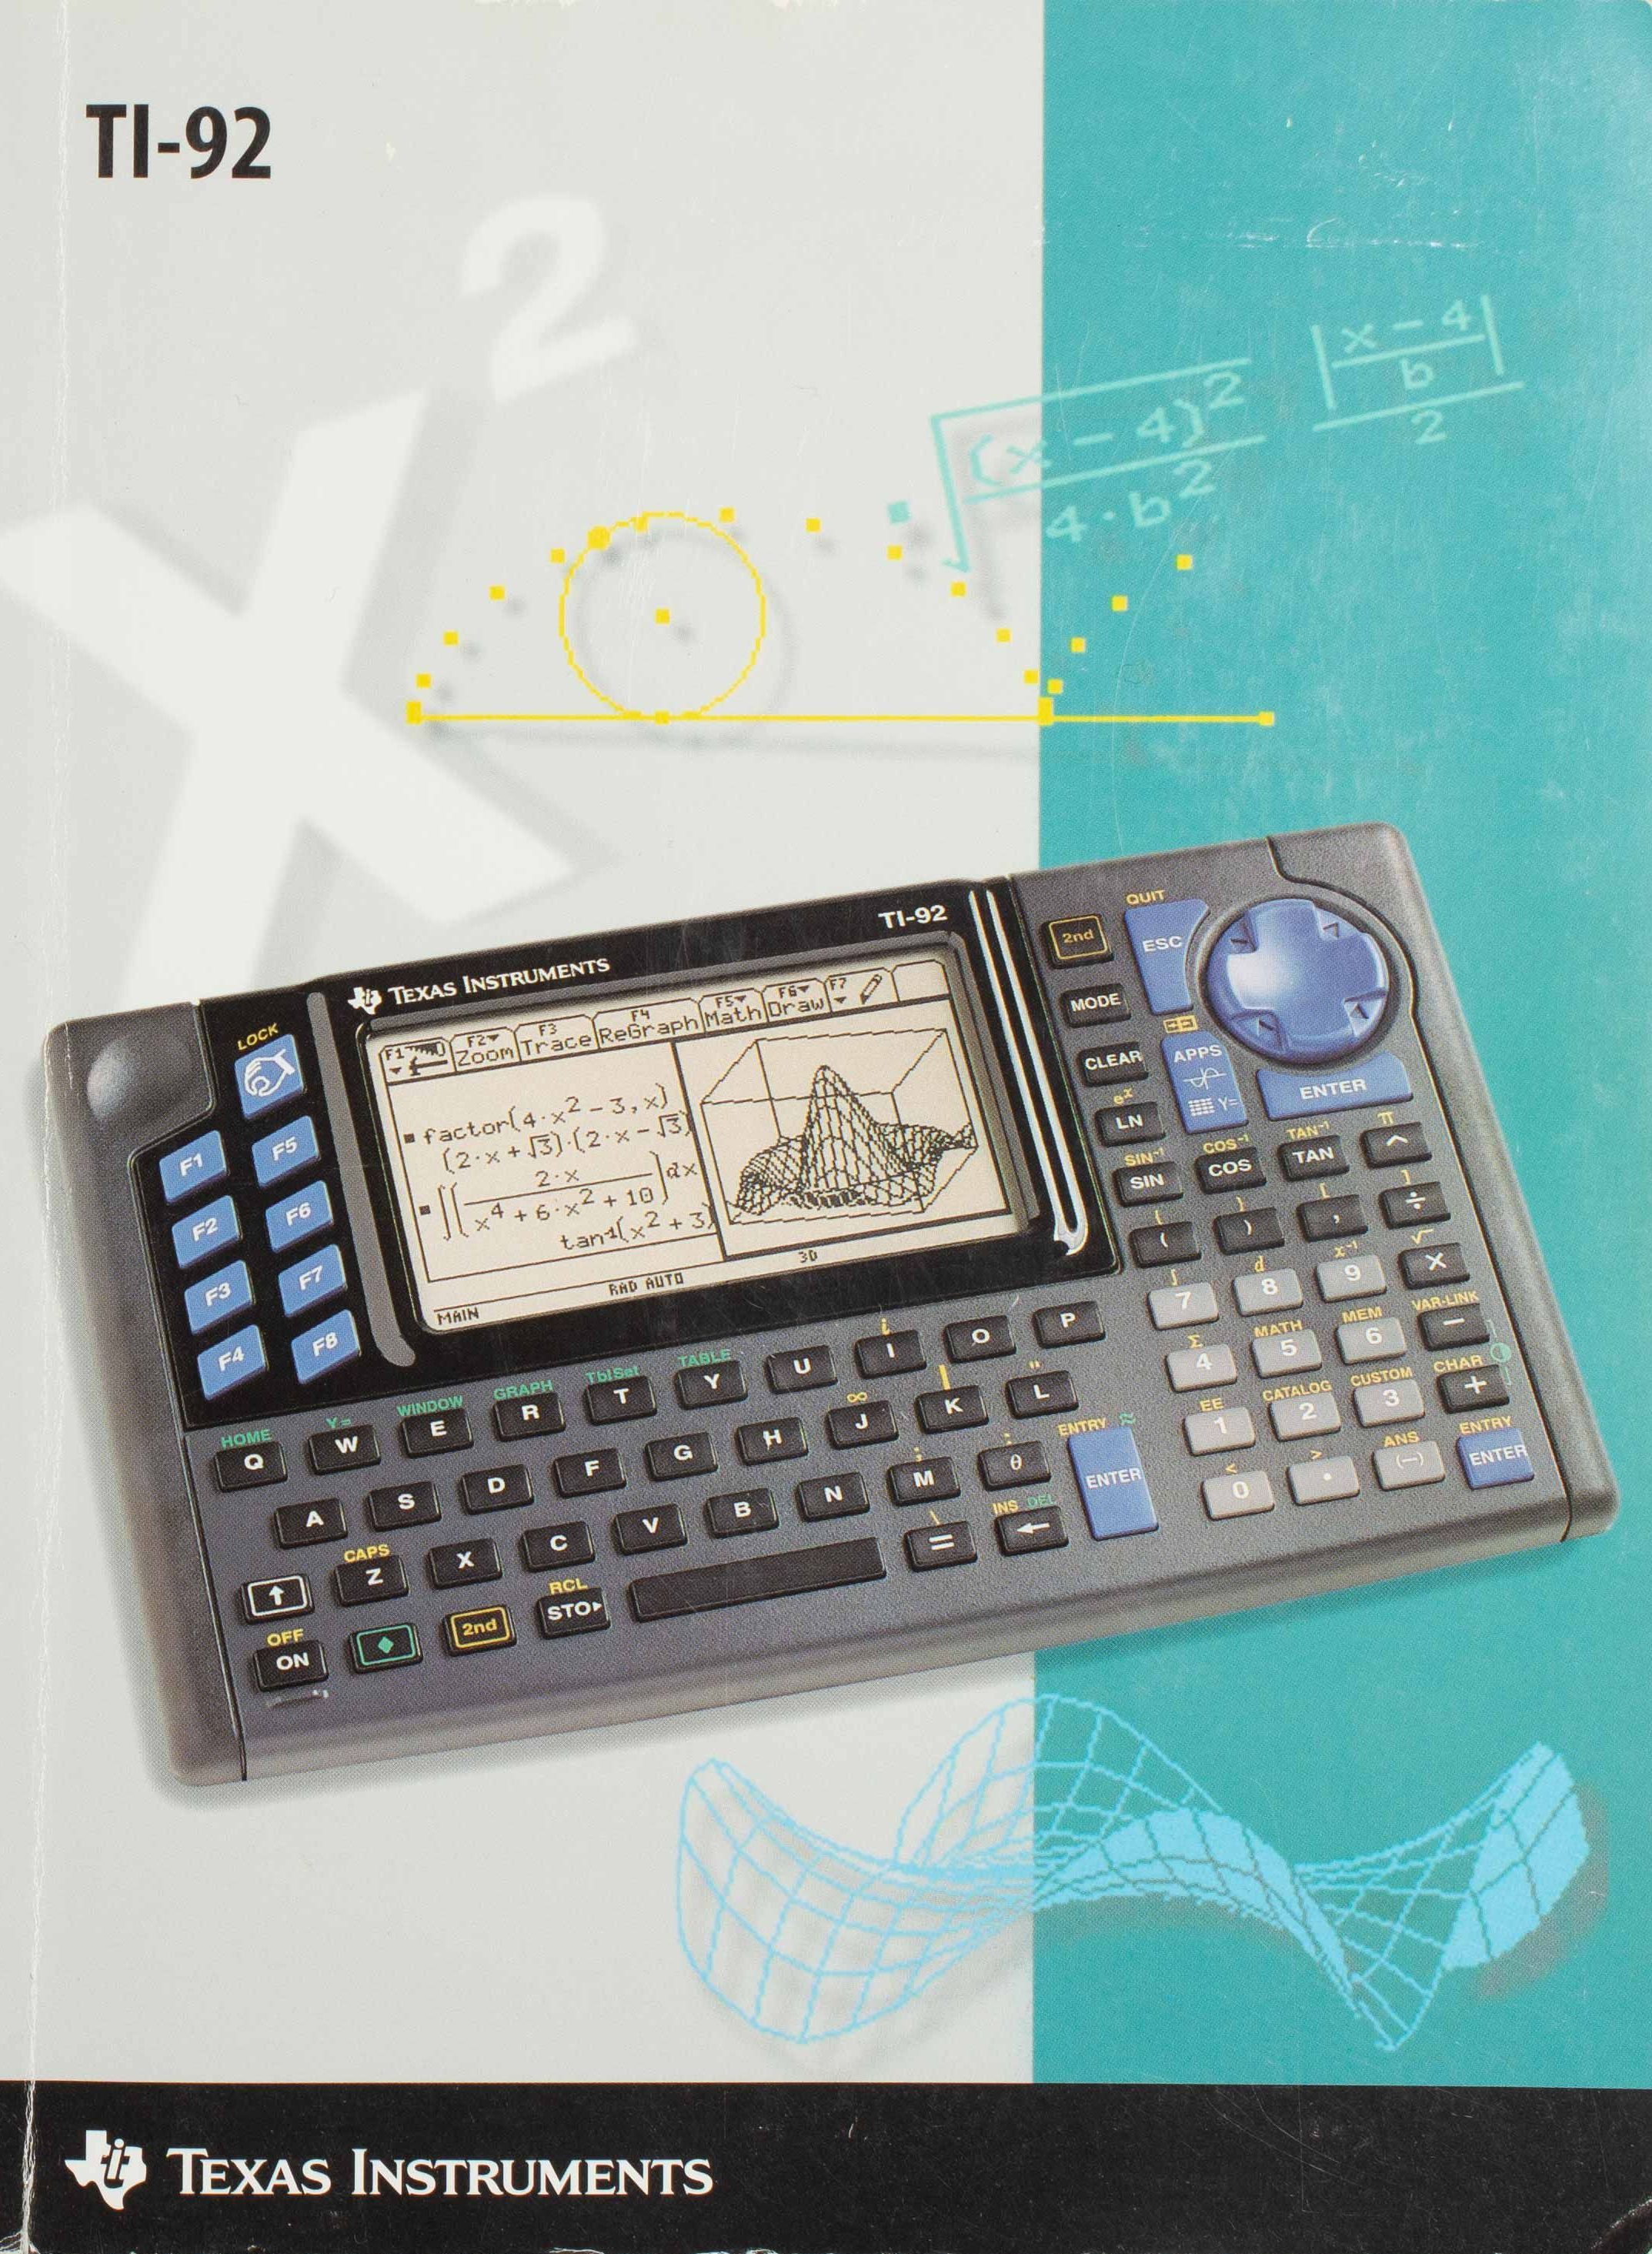 Texas Instruments TI-92 symbolic calculator, c 1998.